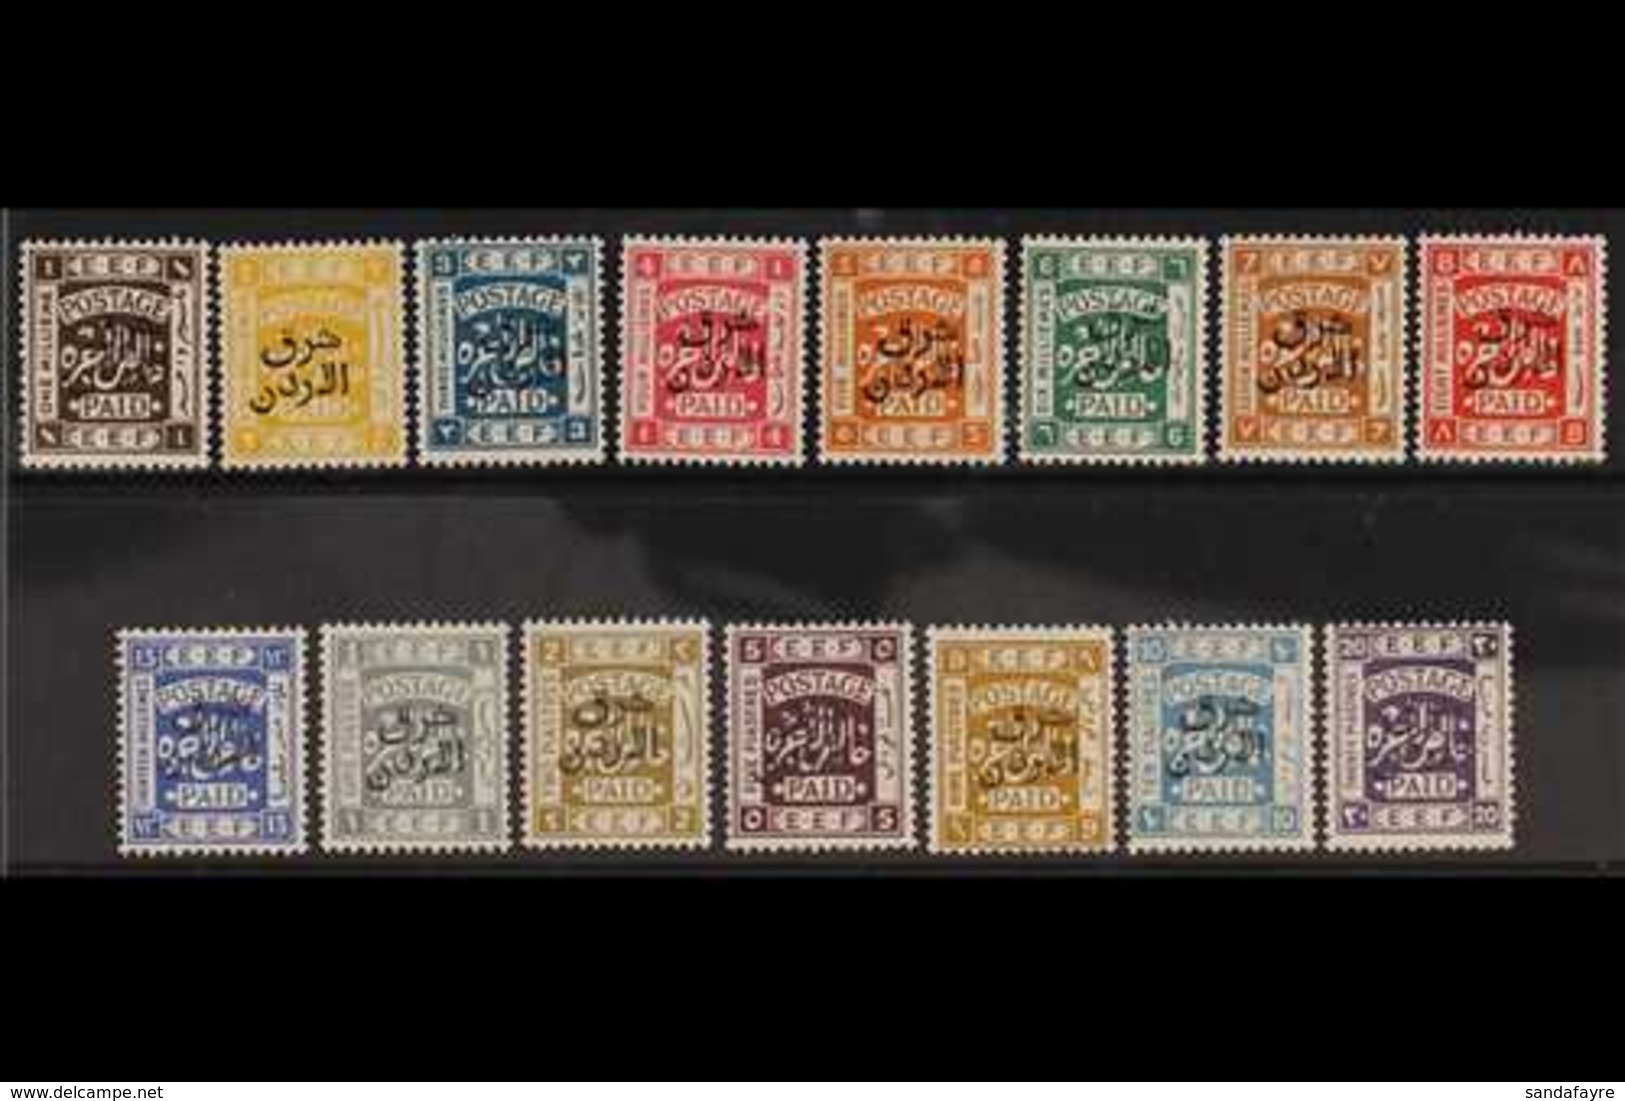 1925-26 "East Of The Jordan" Overprints On Palestine Complete Set, SG 143/57, Very Fine Mint, Very Fresh. (15 Stamps) Fo - Jordanien